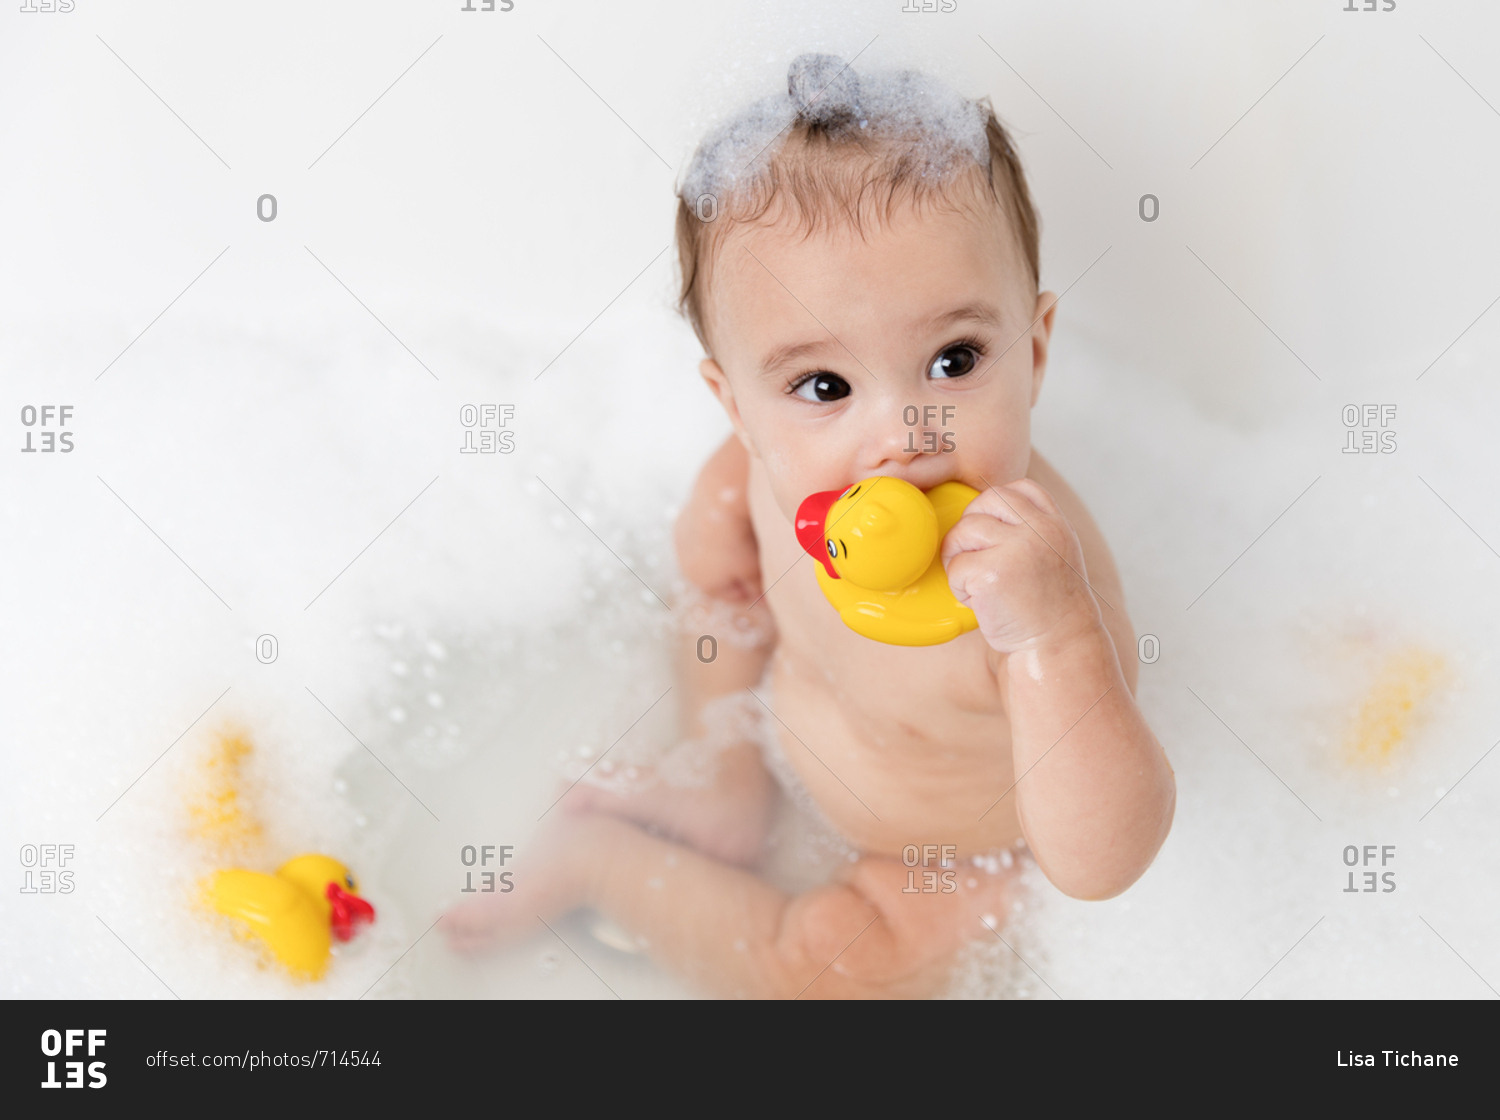 Little baby in bubble bath with rubber ducks